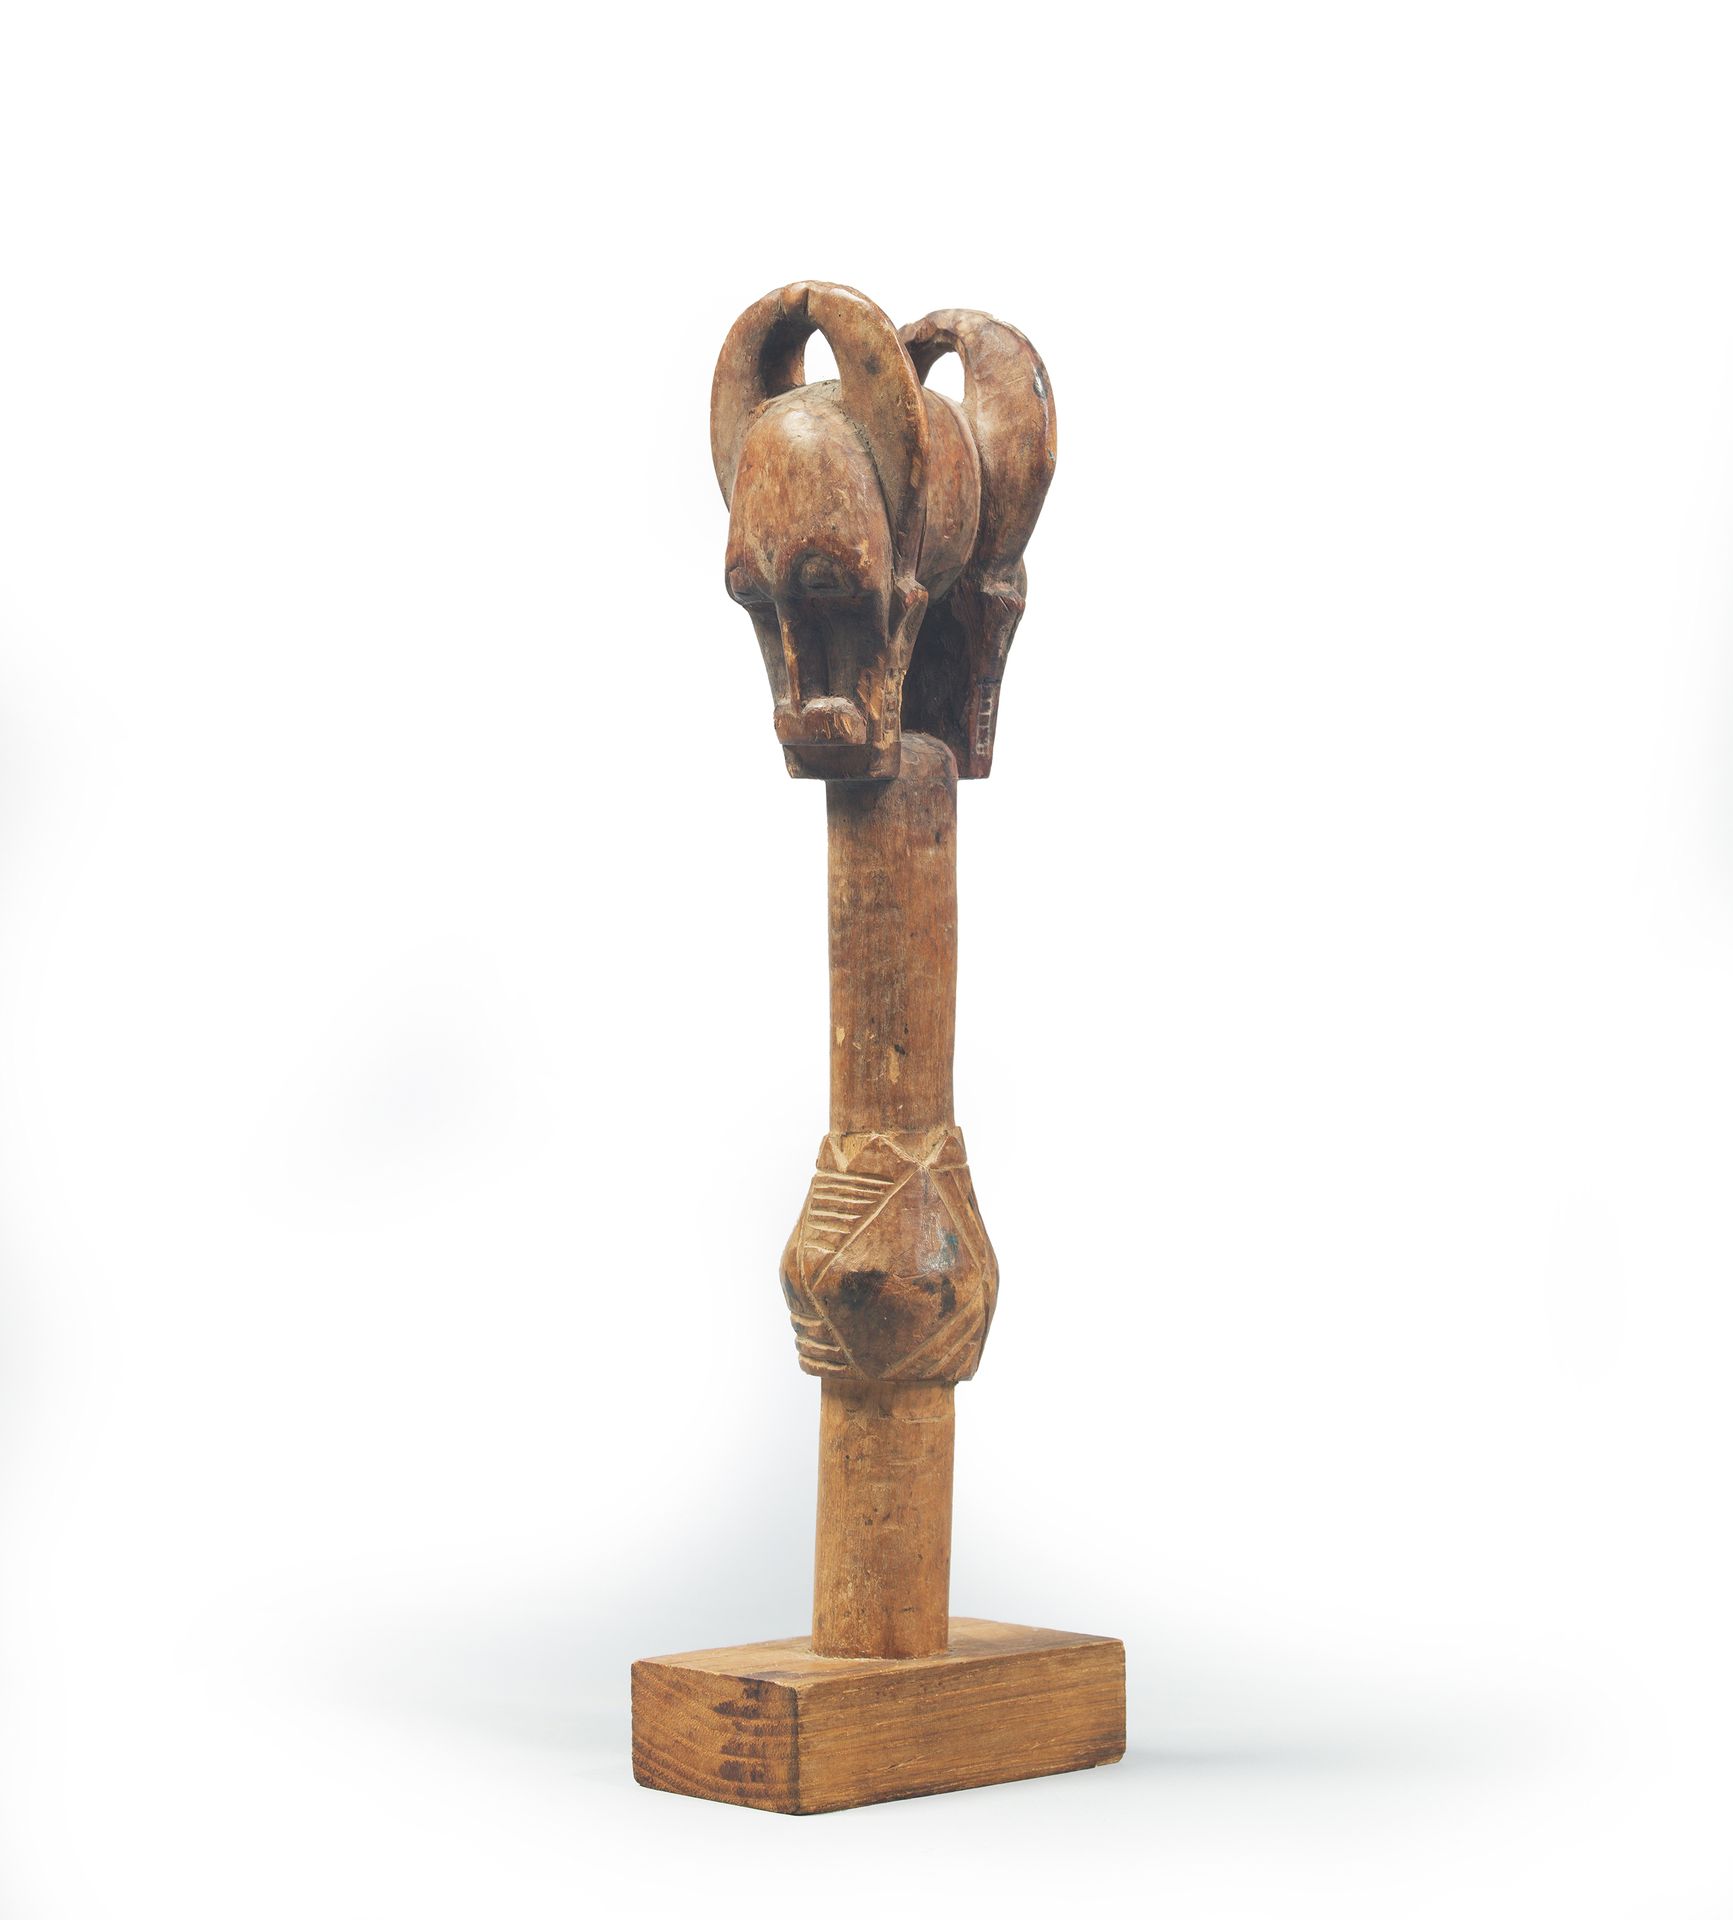 Null 罐顶

鲍勒，象牙海岸 20世纪

带铜锈的木材

21 x 5 厘米